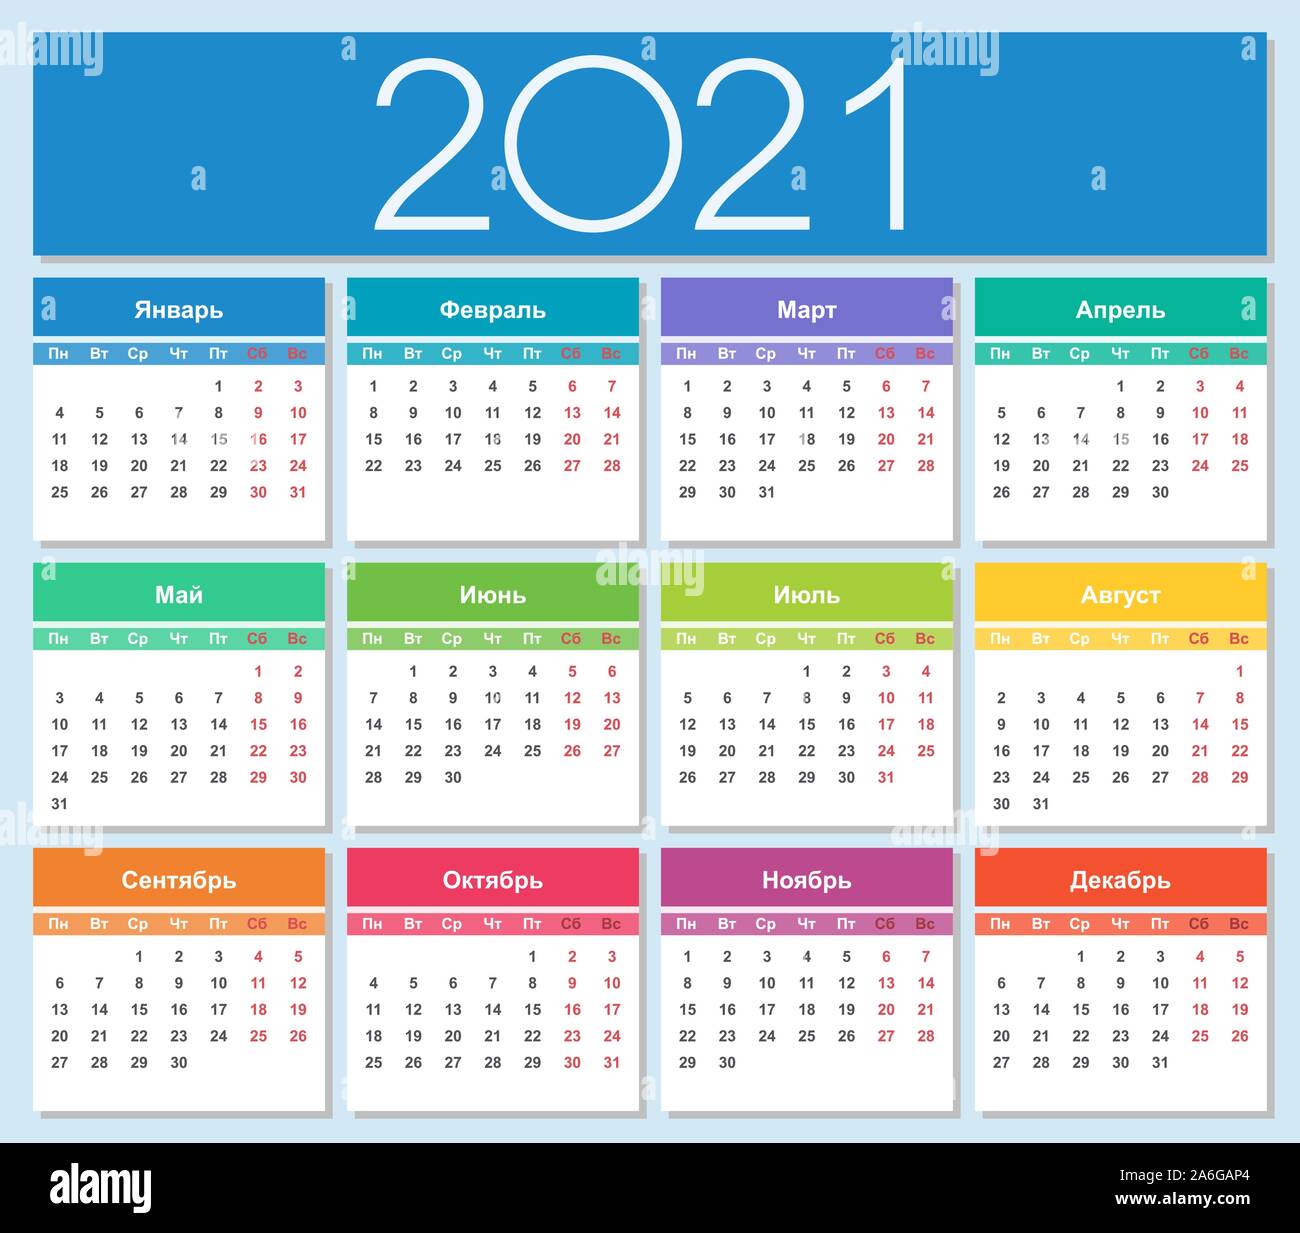 View Year Calendar Of 2021 Pics duniatrendnews